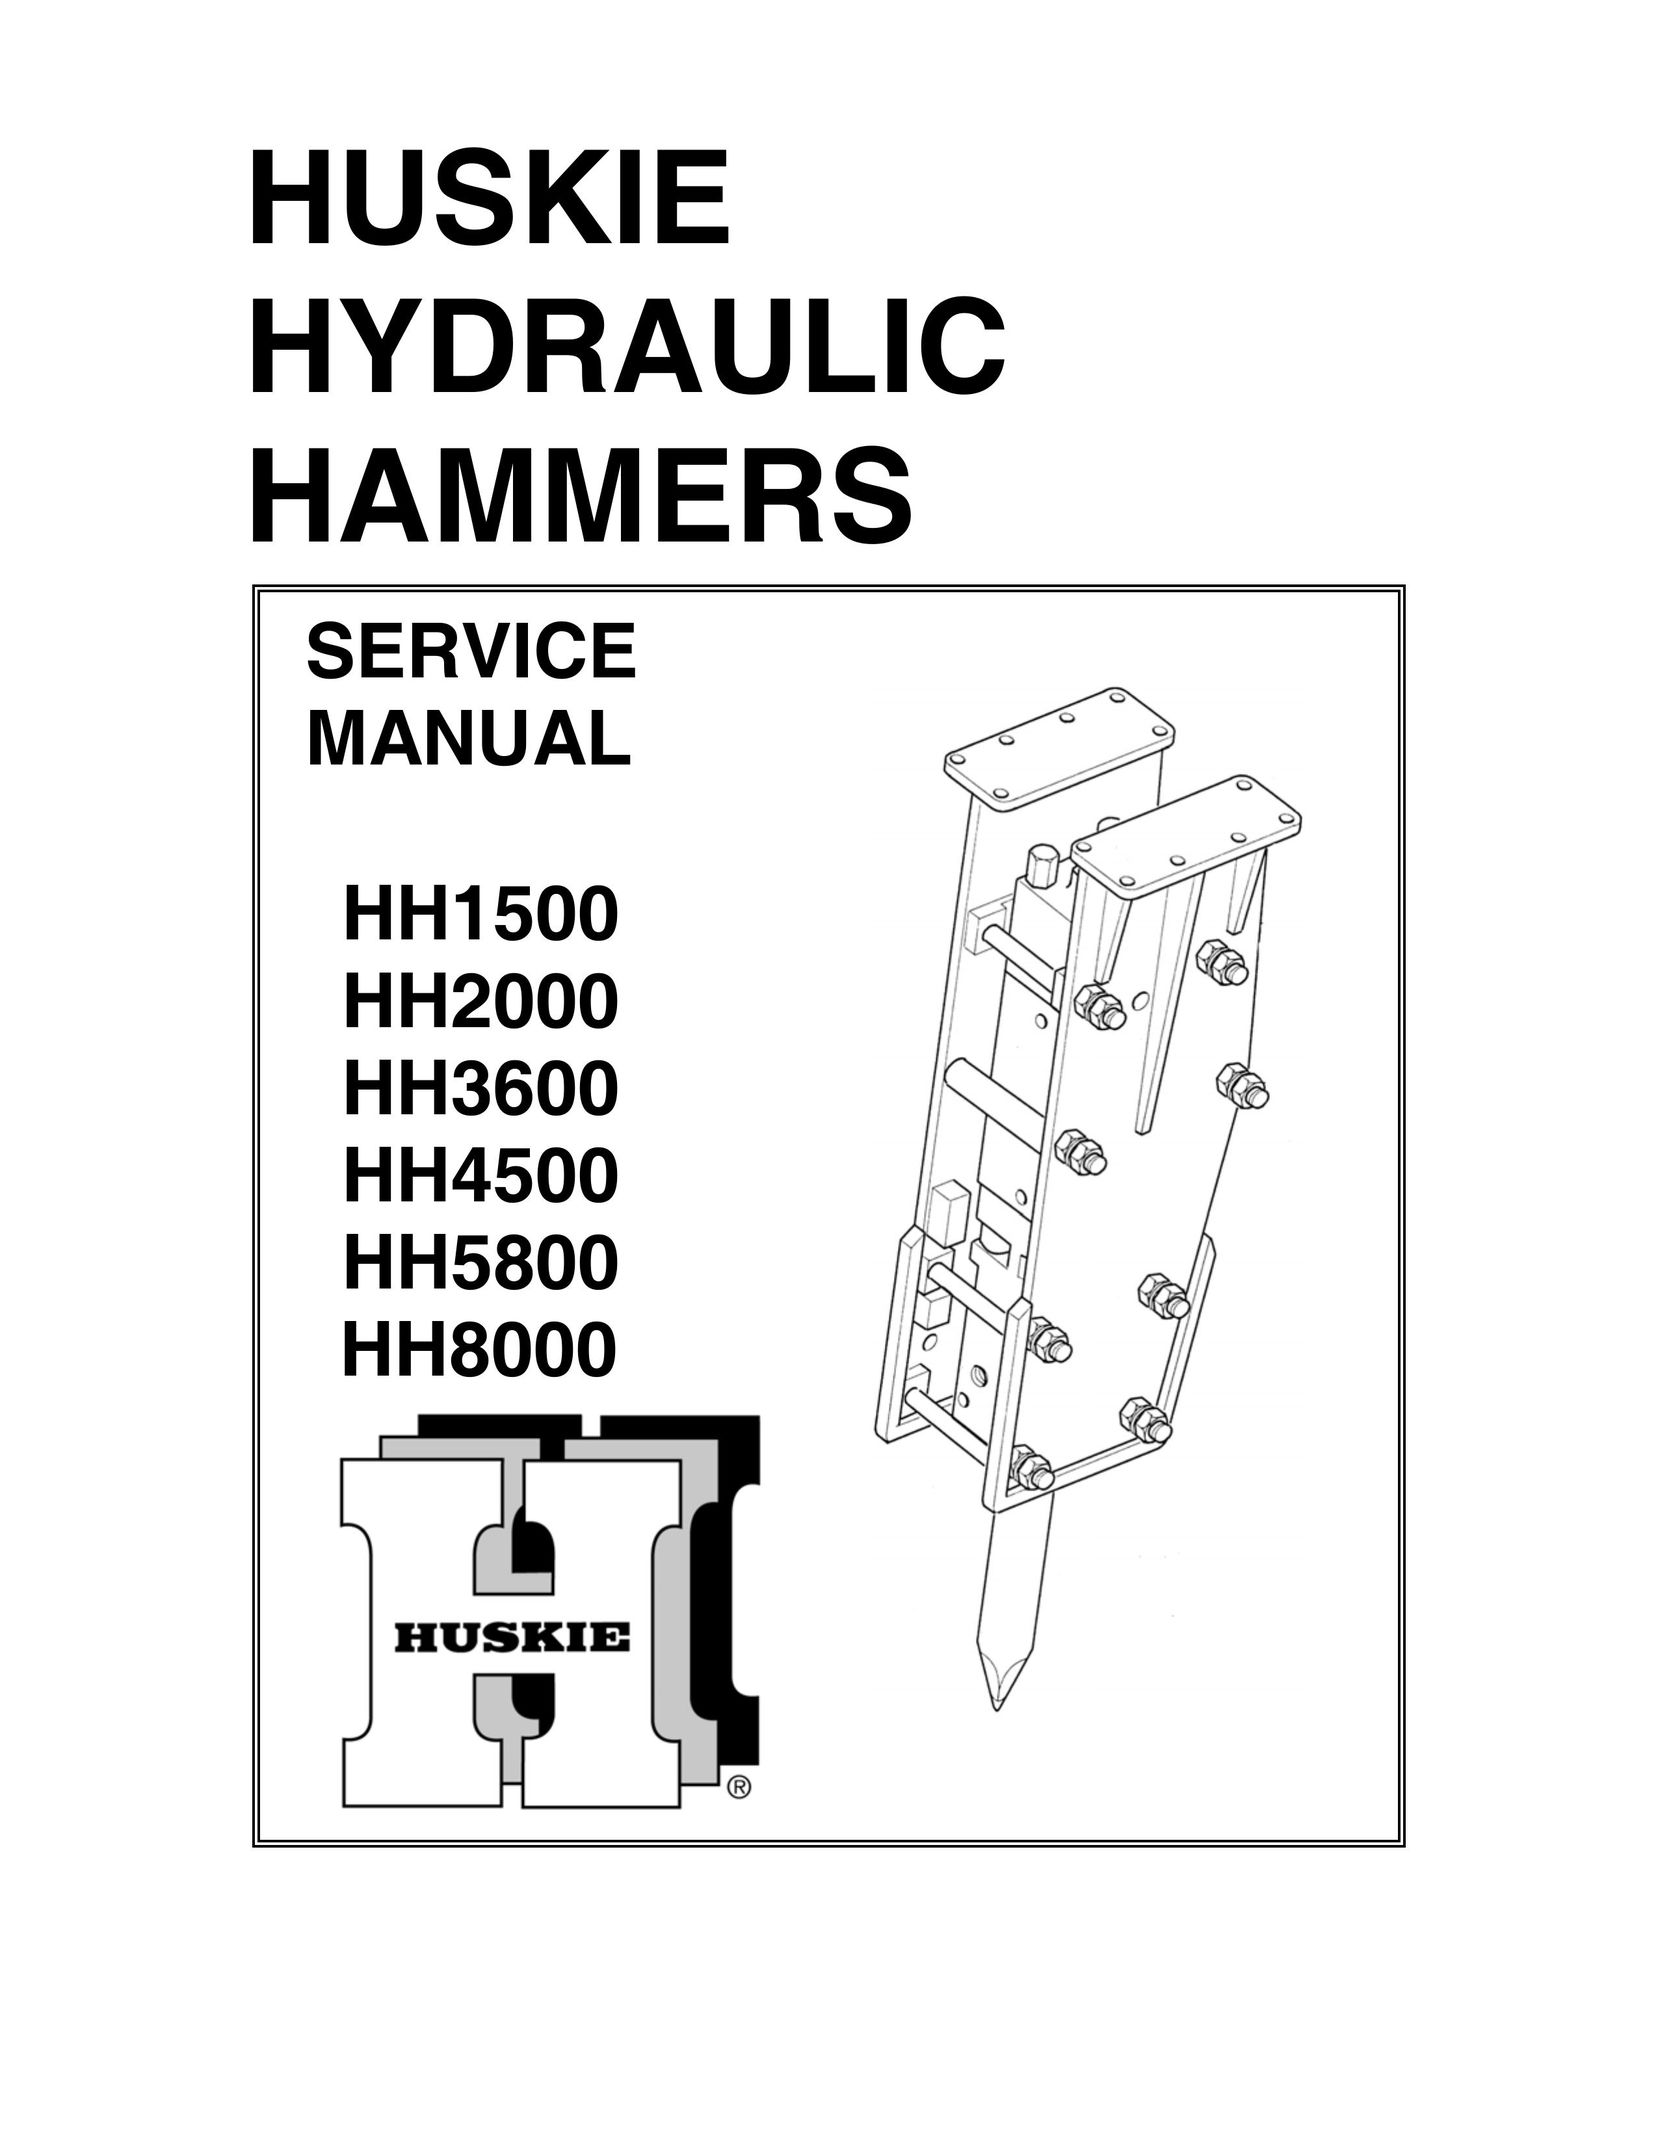 Huskee HH2000 Cordless Drill User Manual